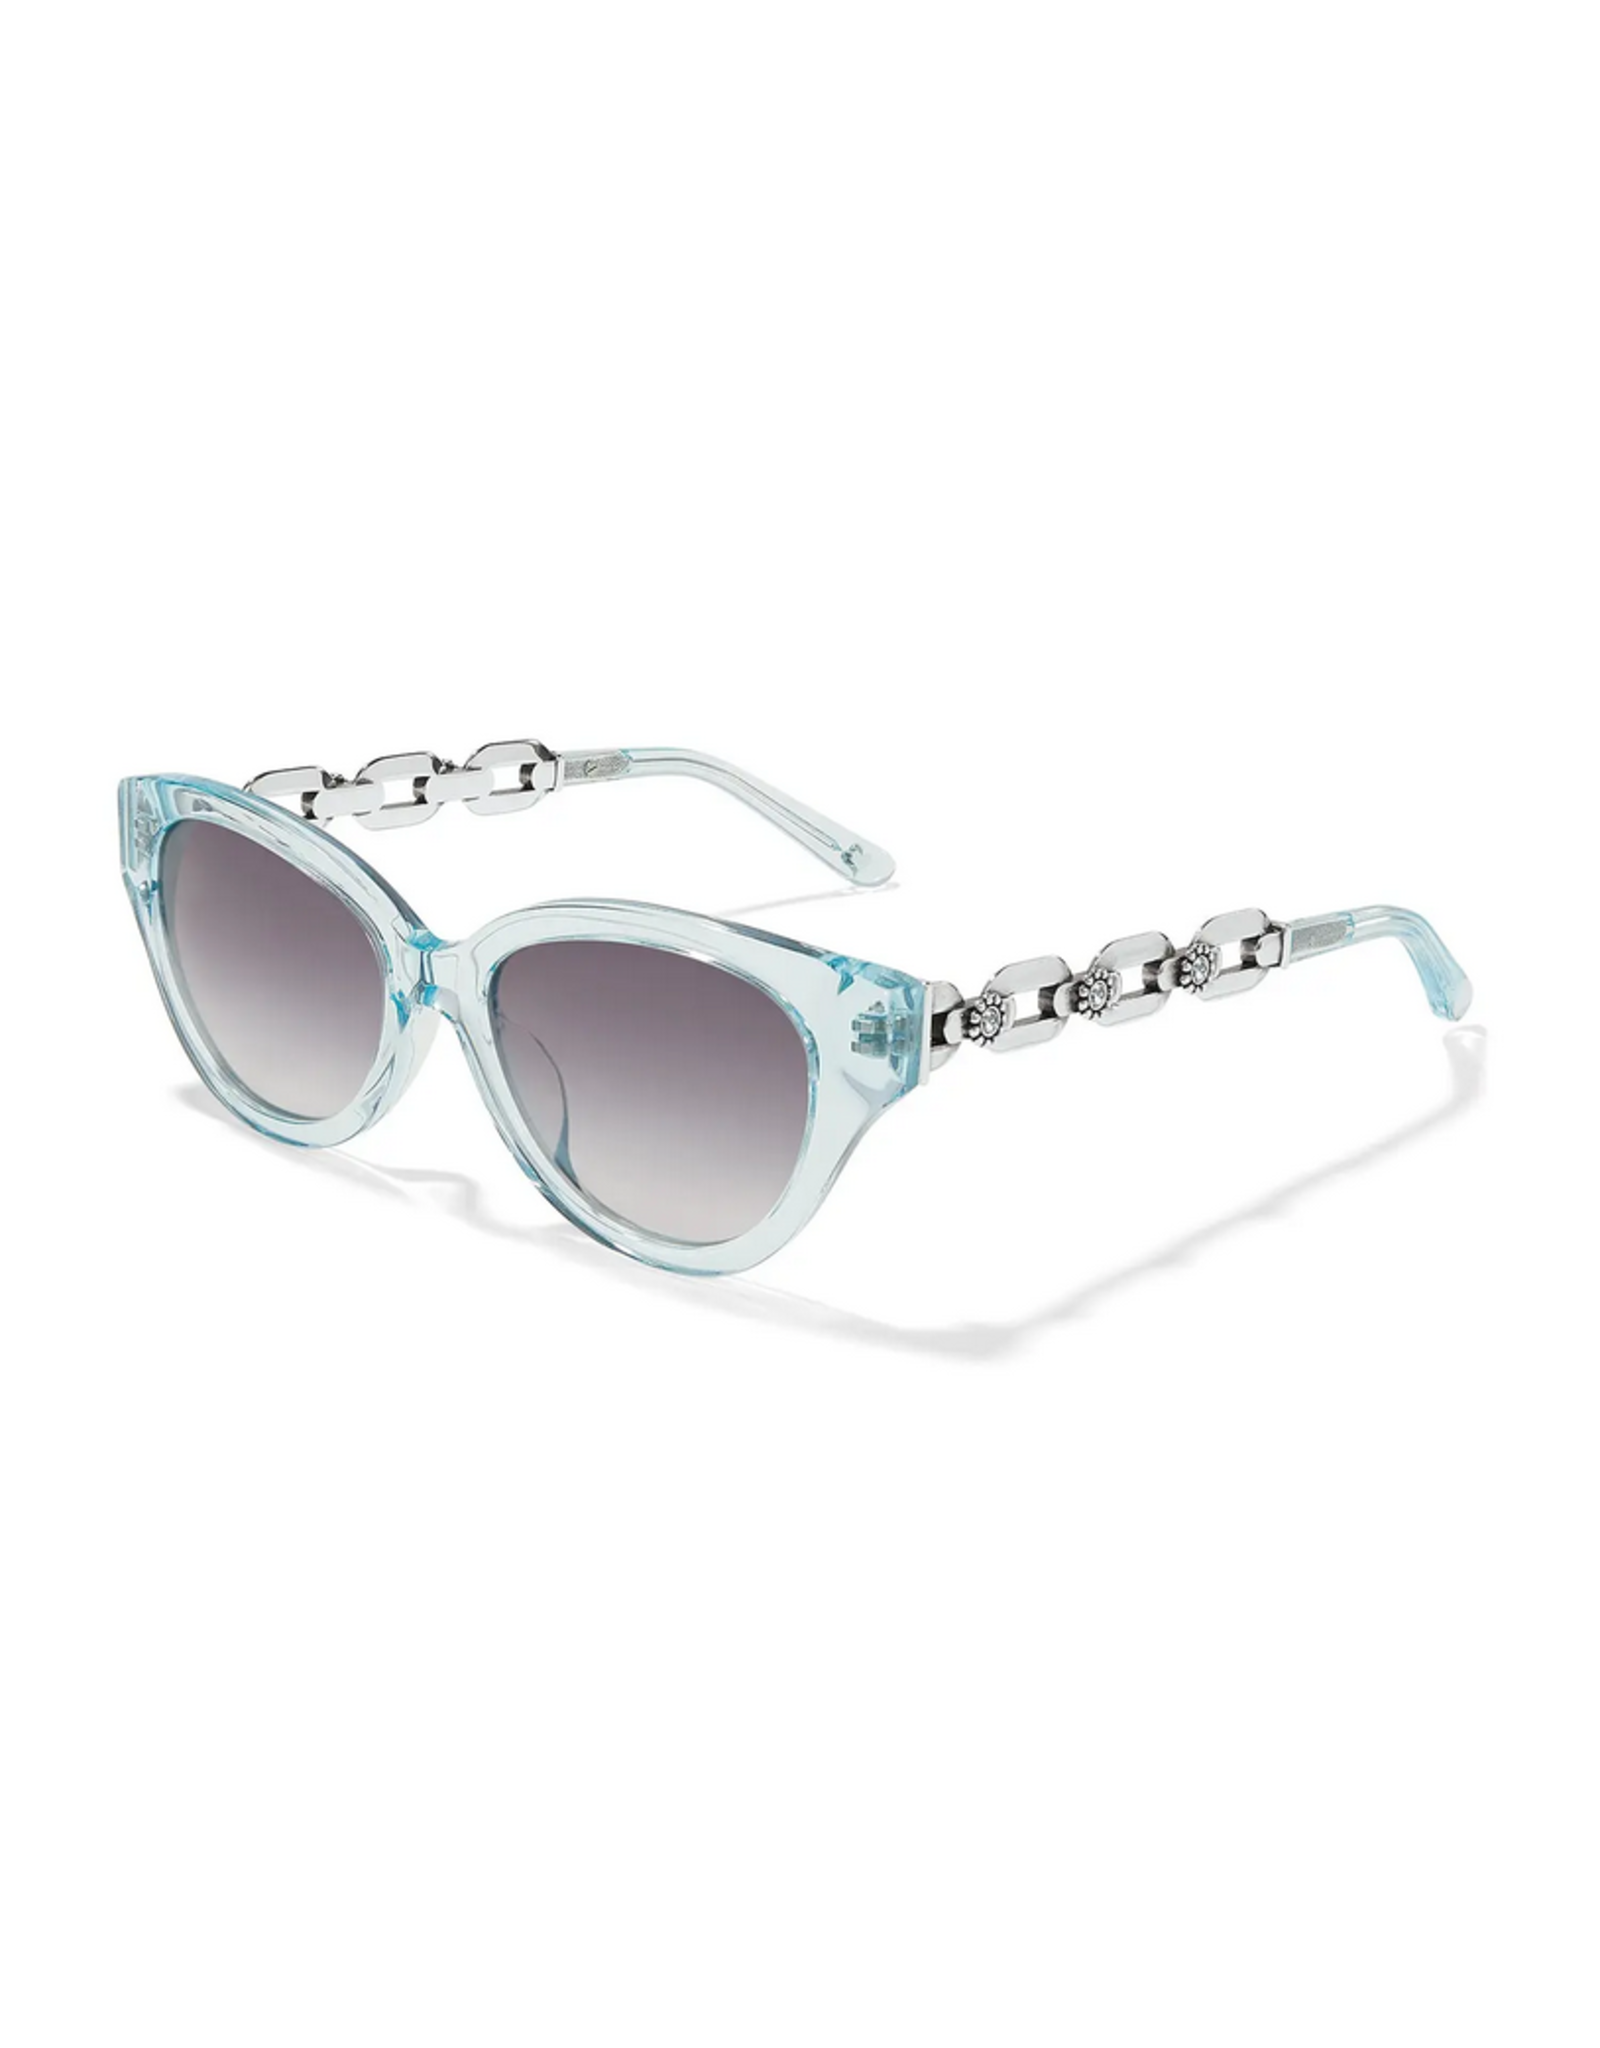 Brighton Twinkle Chain Ocean Wtr Sunglasses